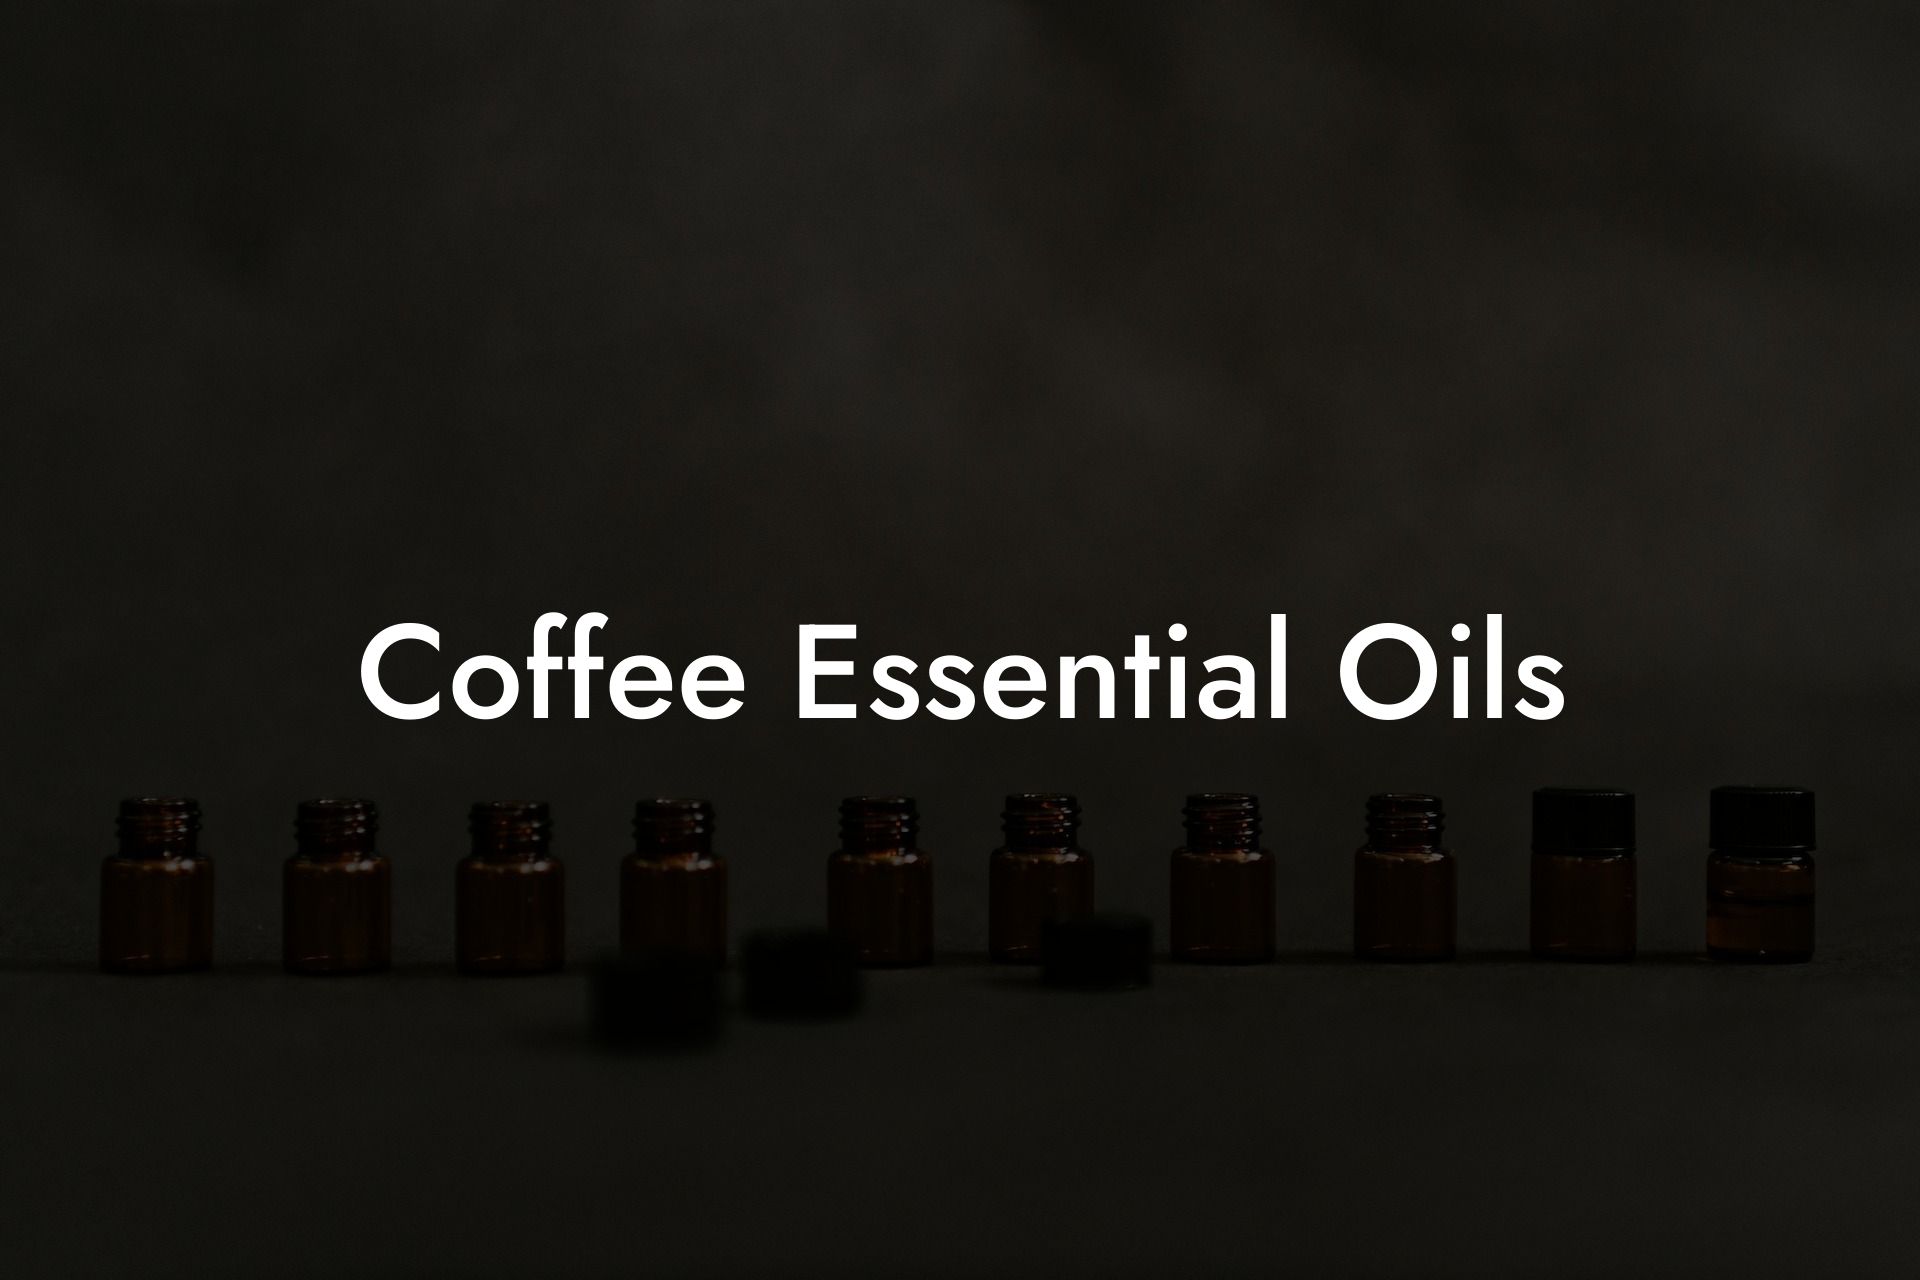 Coffee Essential Oils